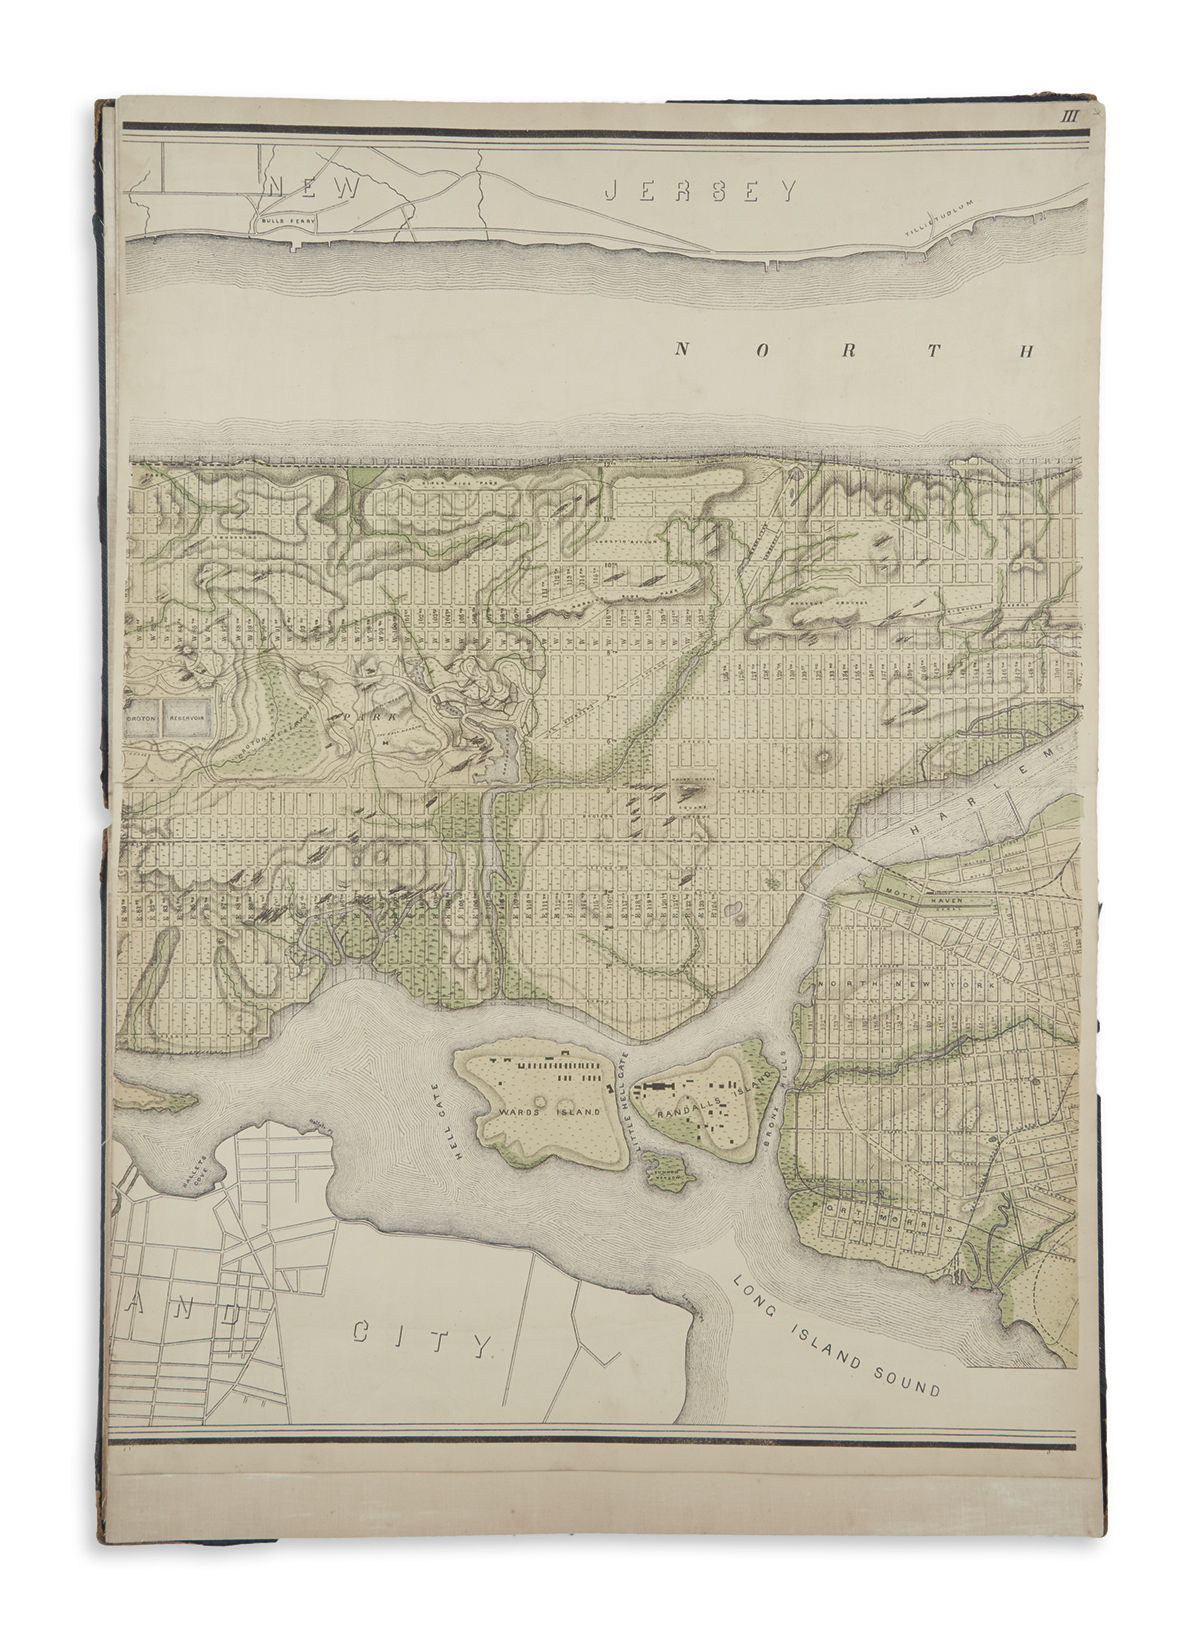 (NEW YORK CITY.) Viele, Egbert. Topographical Atlas of the City of New York